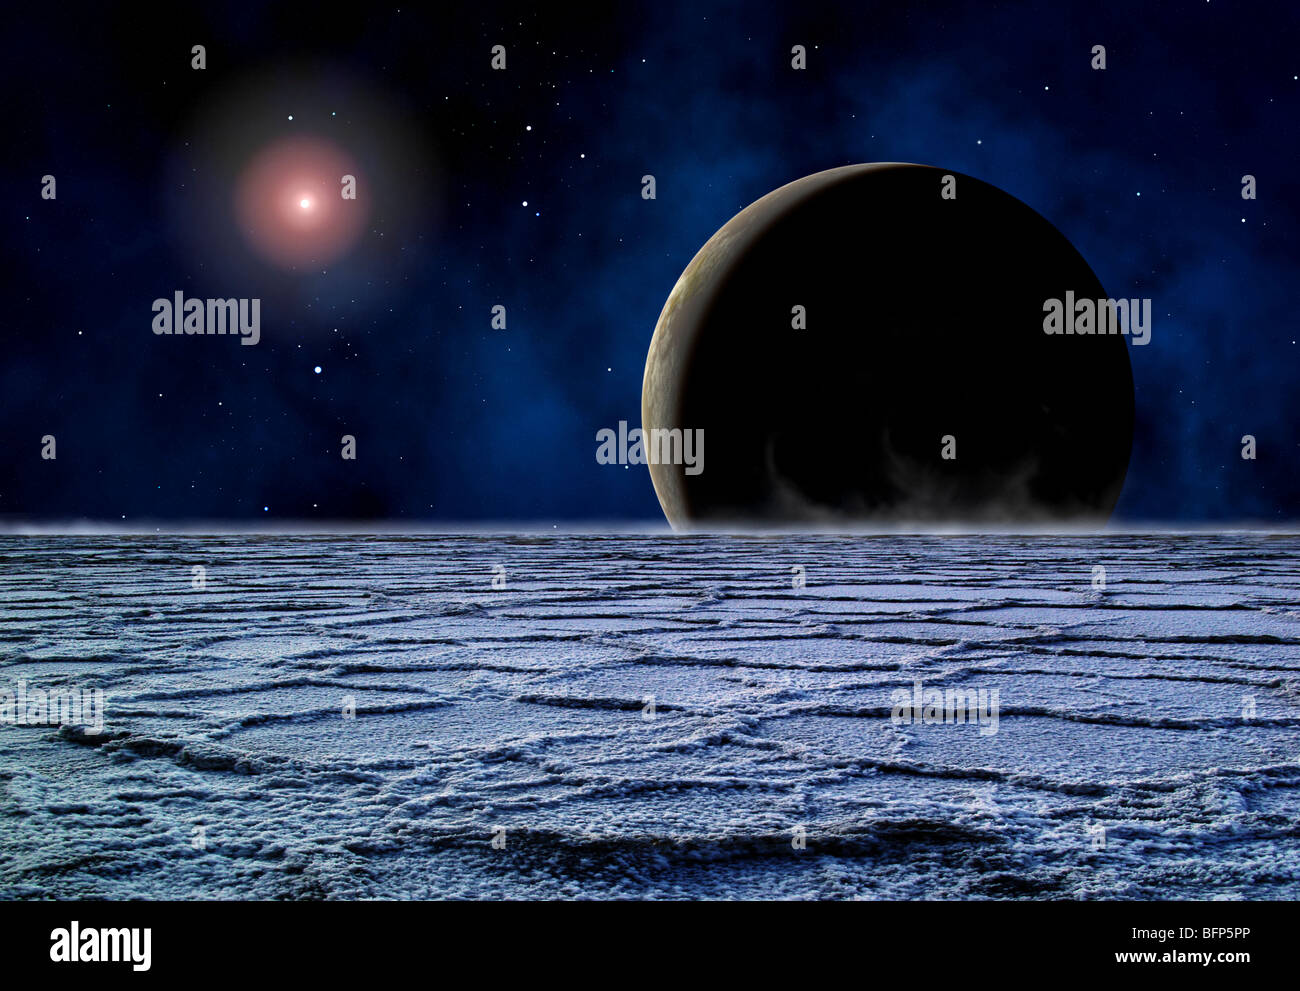 A distant star illuminates an extrasolar planet on the horizon of a frozen moon. Stock Photo